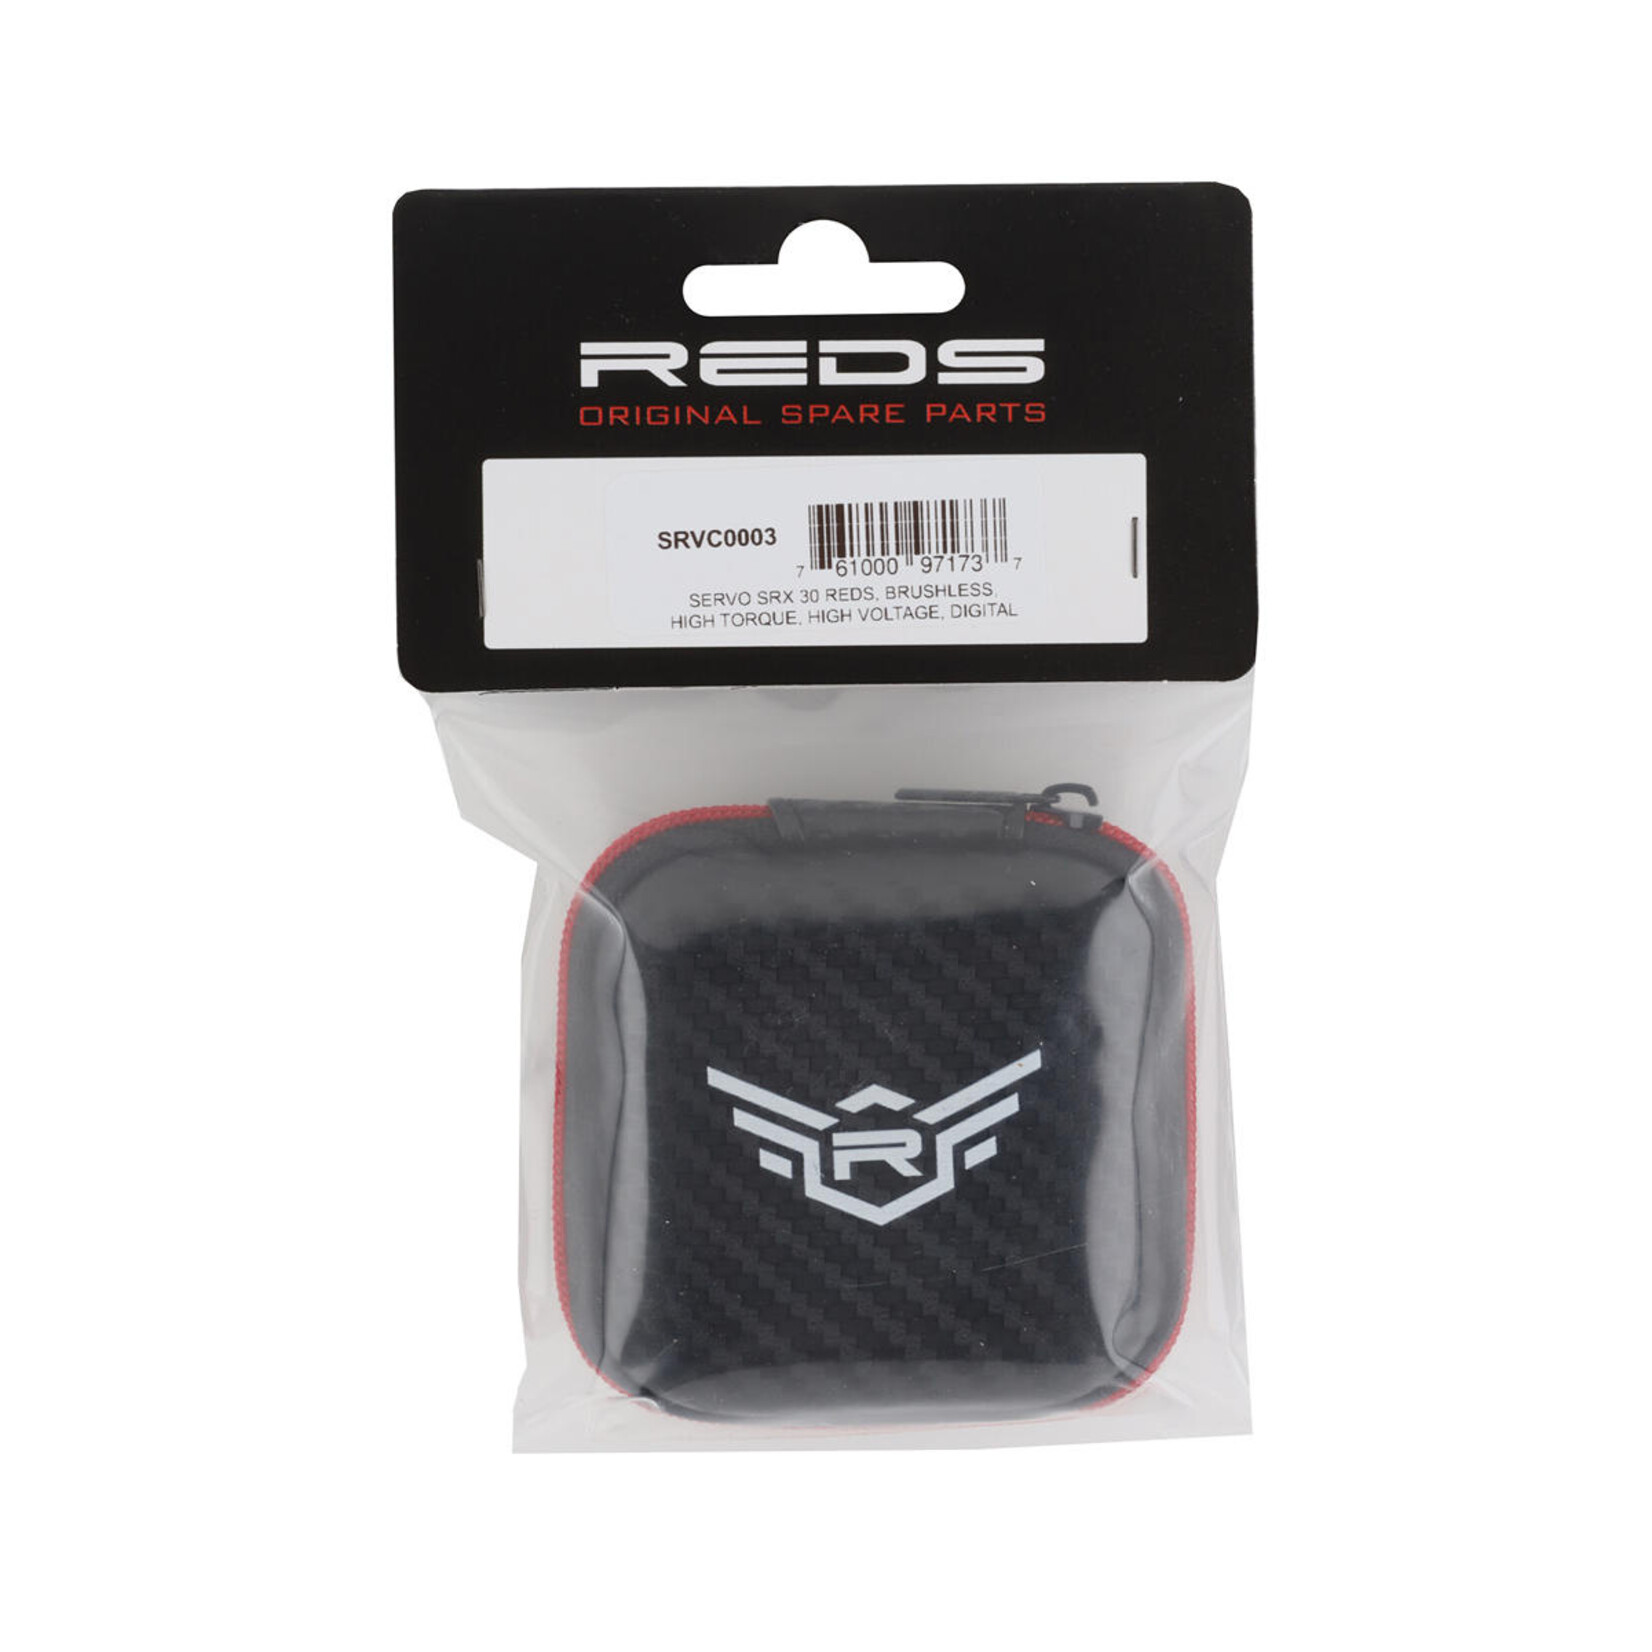 Reds REDS SRX 30 HV Digital Brushless High Torque Servo (6V-8.4V) #SRVC0003